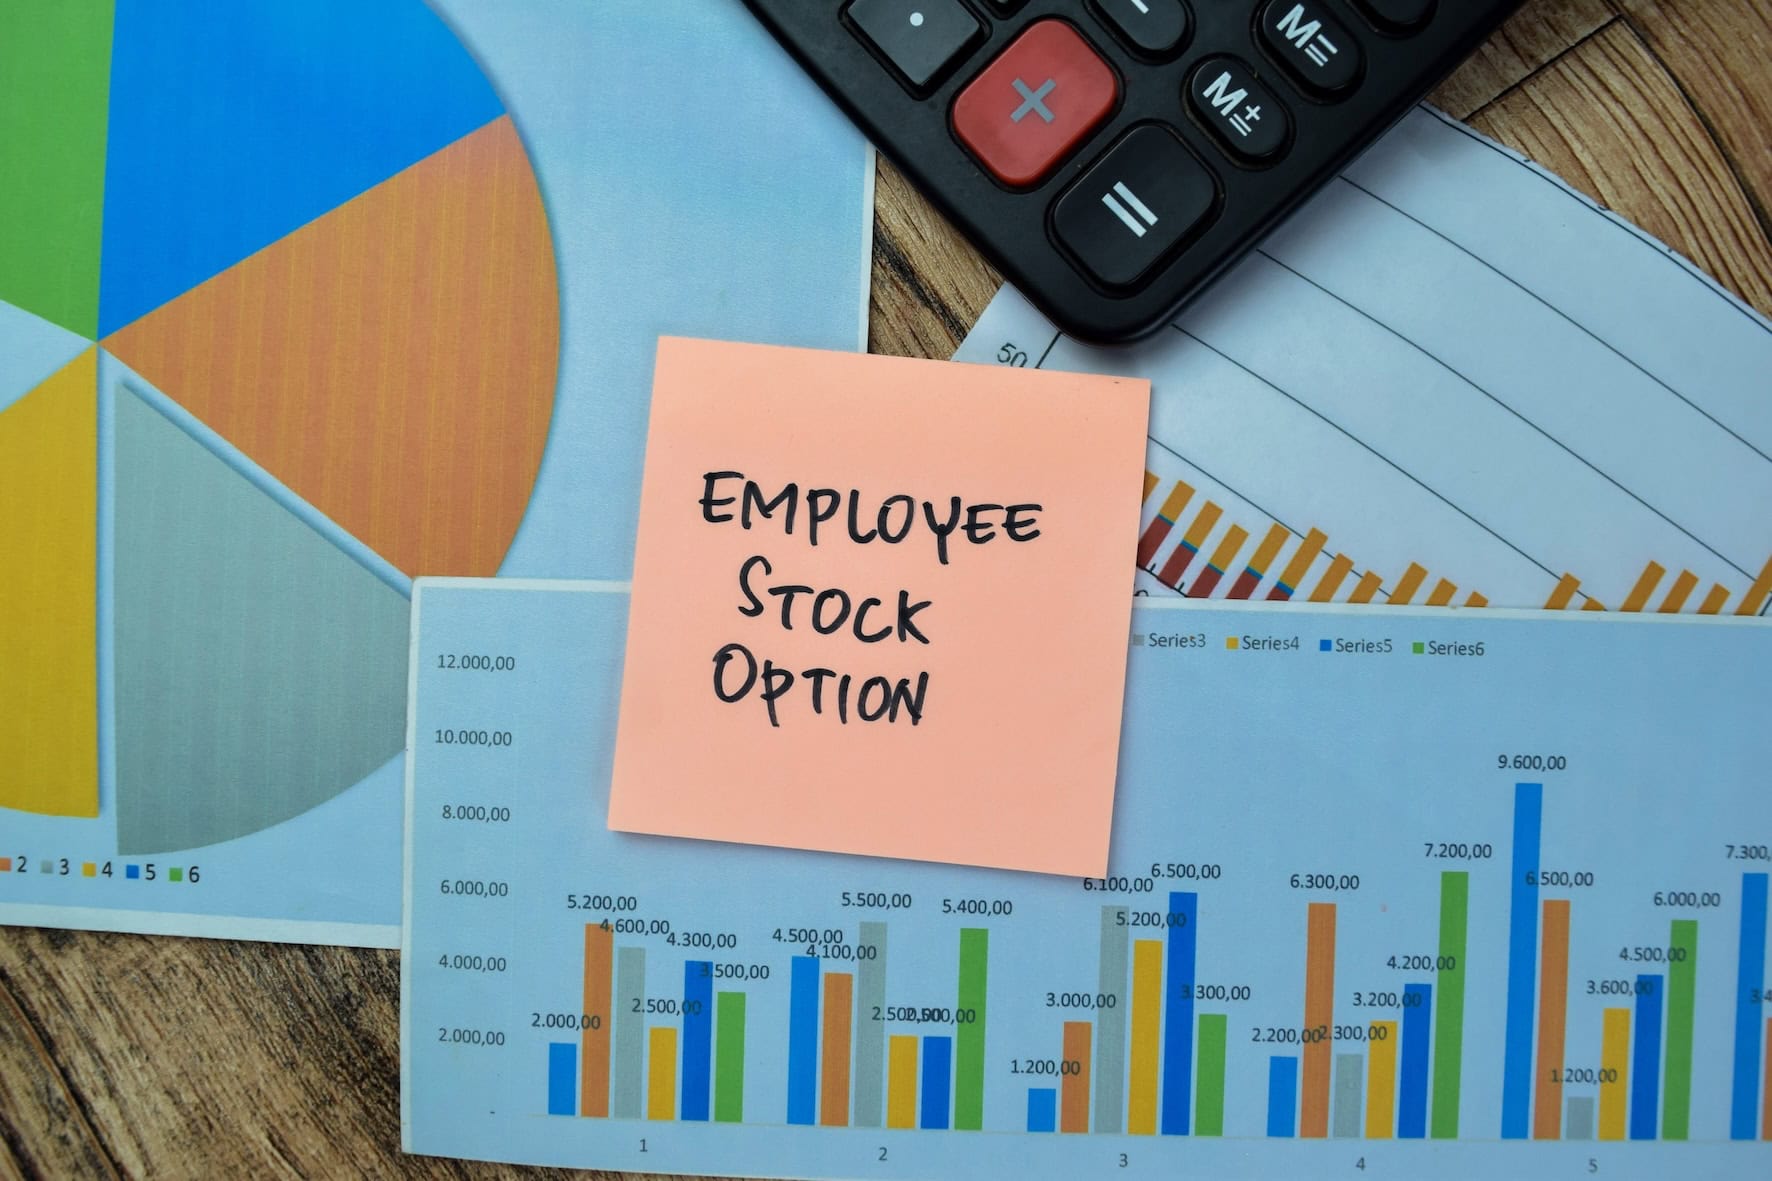 Employee stock option plan (ESOP) in Hong Kong